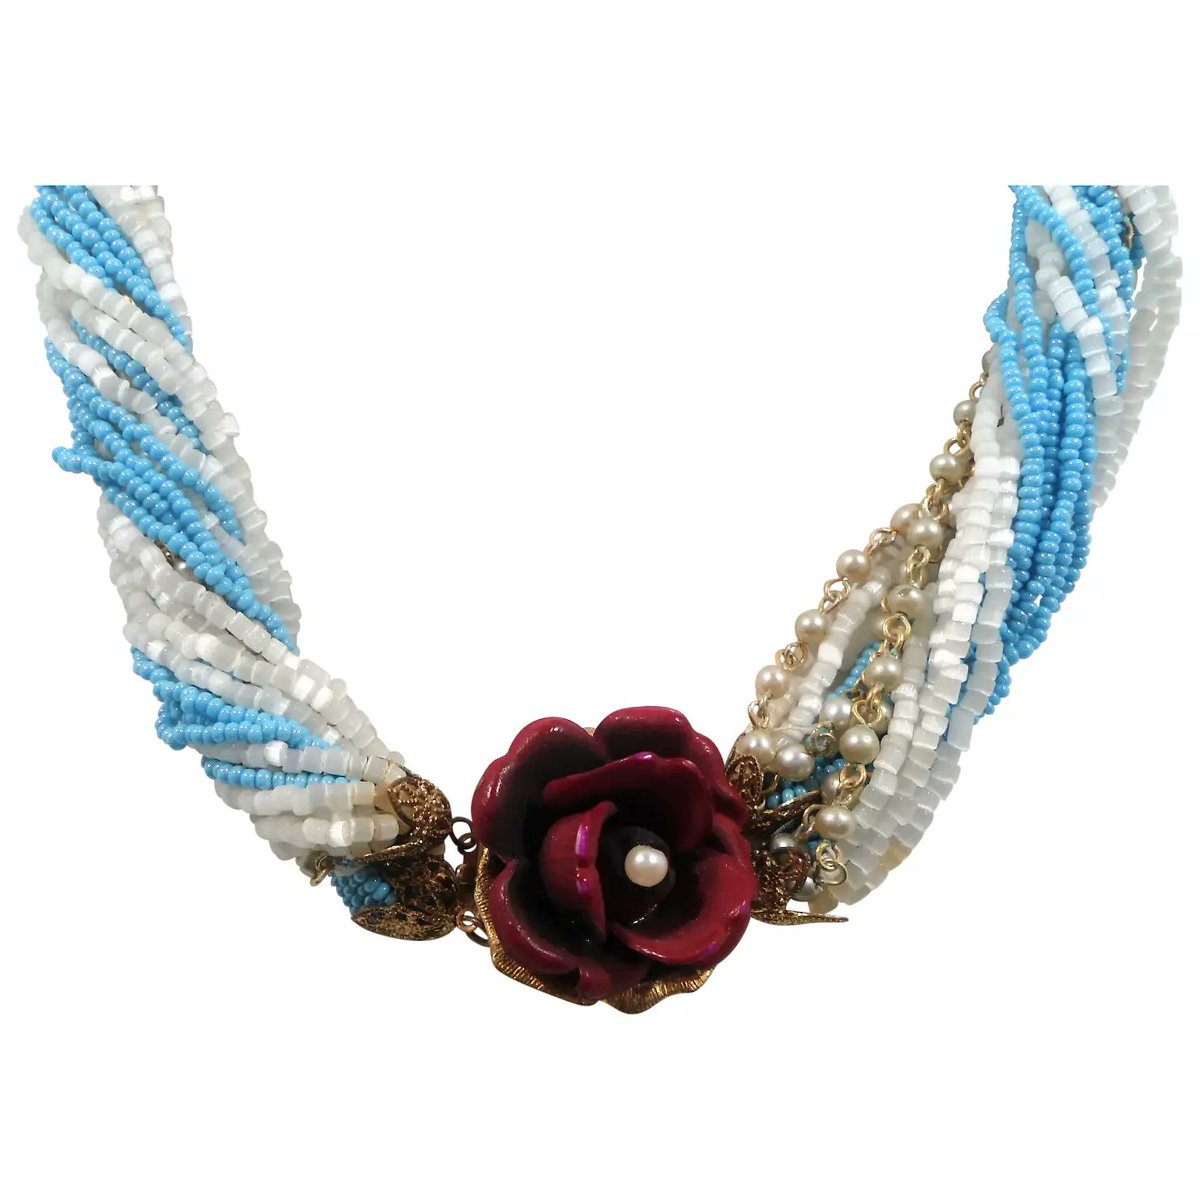 Blue White Glass Imitation Peals Beaded Torsade Necklace Rose Clasp.   Make an Offer!
#ebay #vintage #retro #jewelry #bargains #beads #brooch #necklace #cameos #figurals #earrings  #designer #hautecouture #giftideas #diva #fashionista #glam
ebay.com/itm/1258732575…